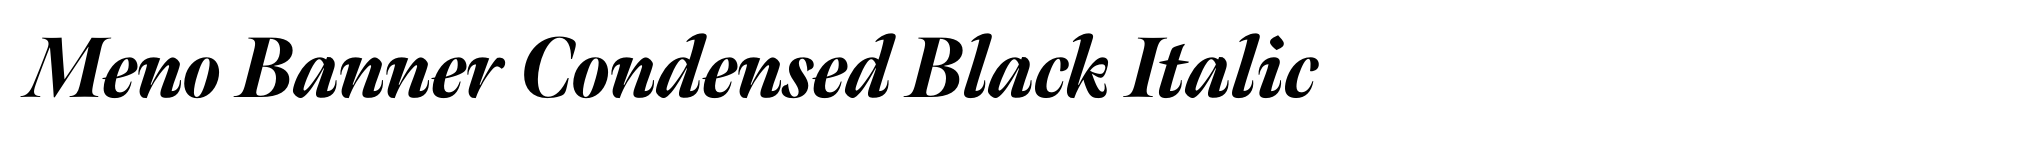 Meno Banner Condensed Black Italic image